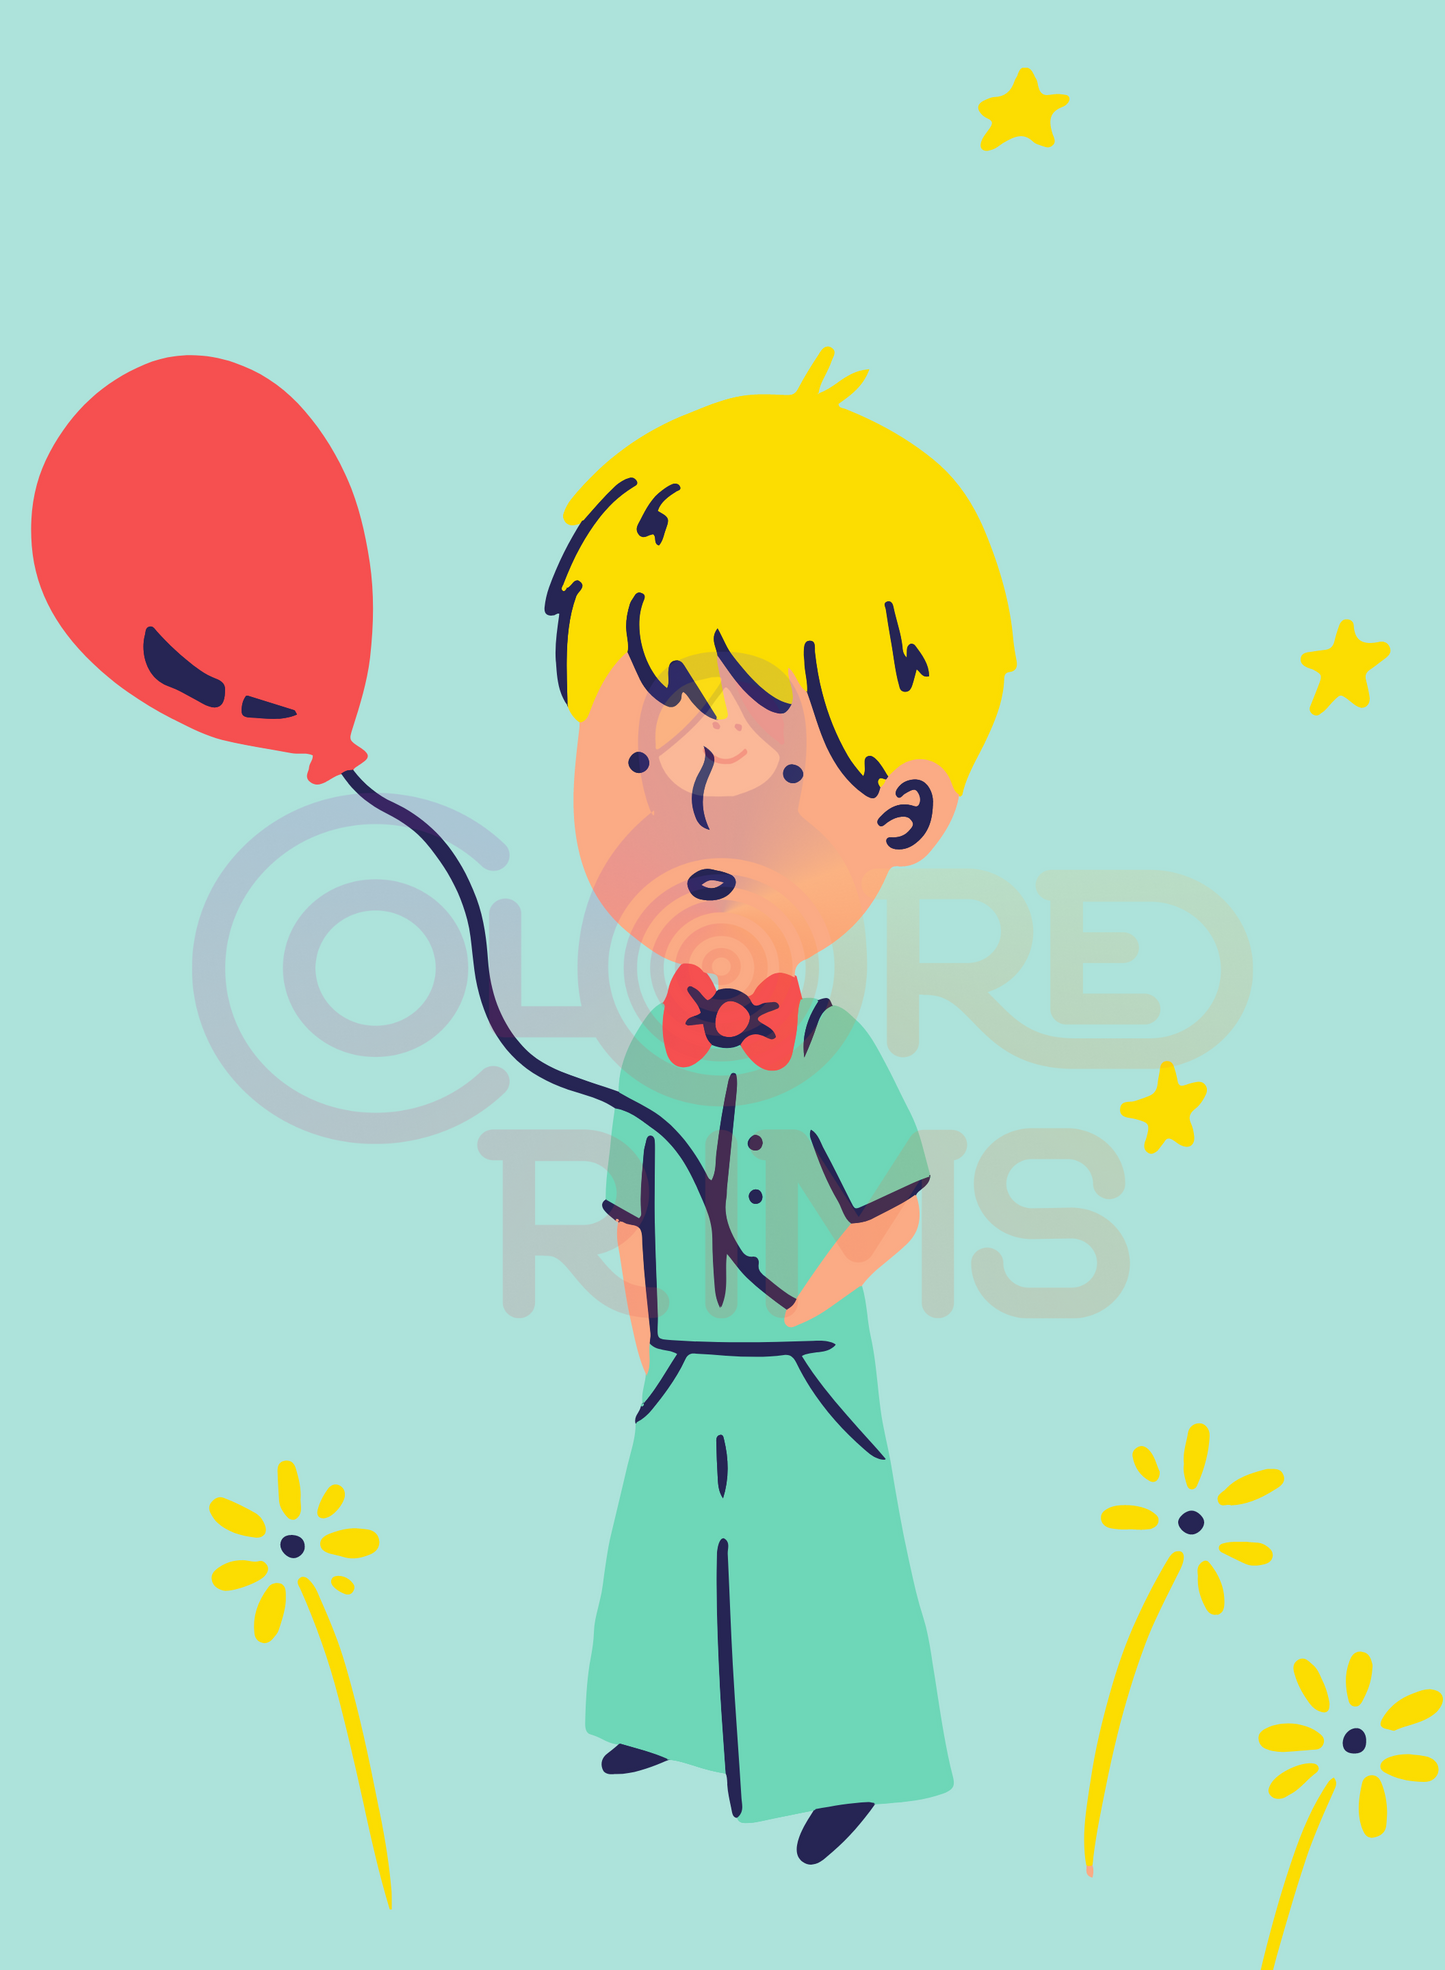 Boy with a Balloon Wall Art